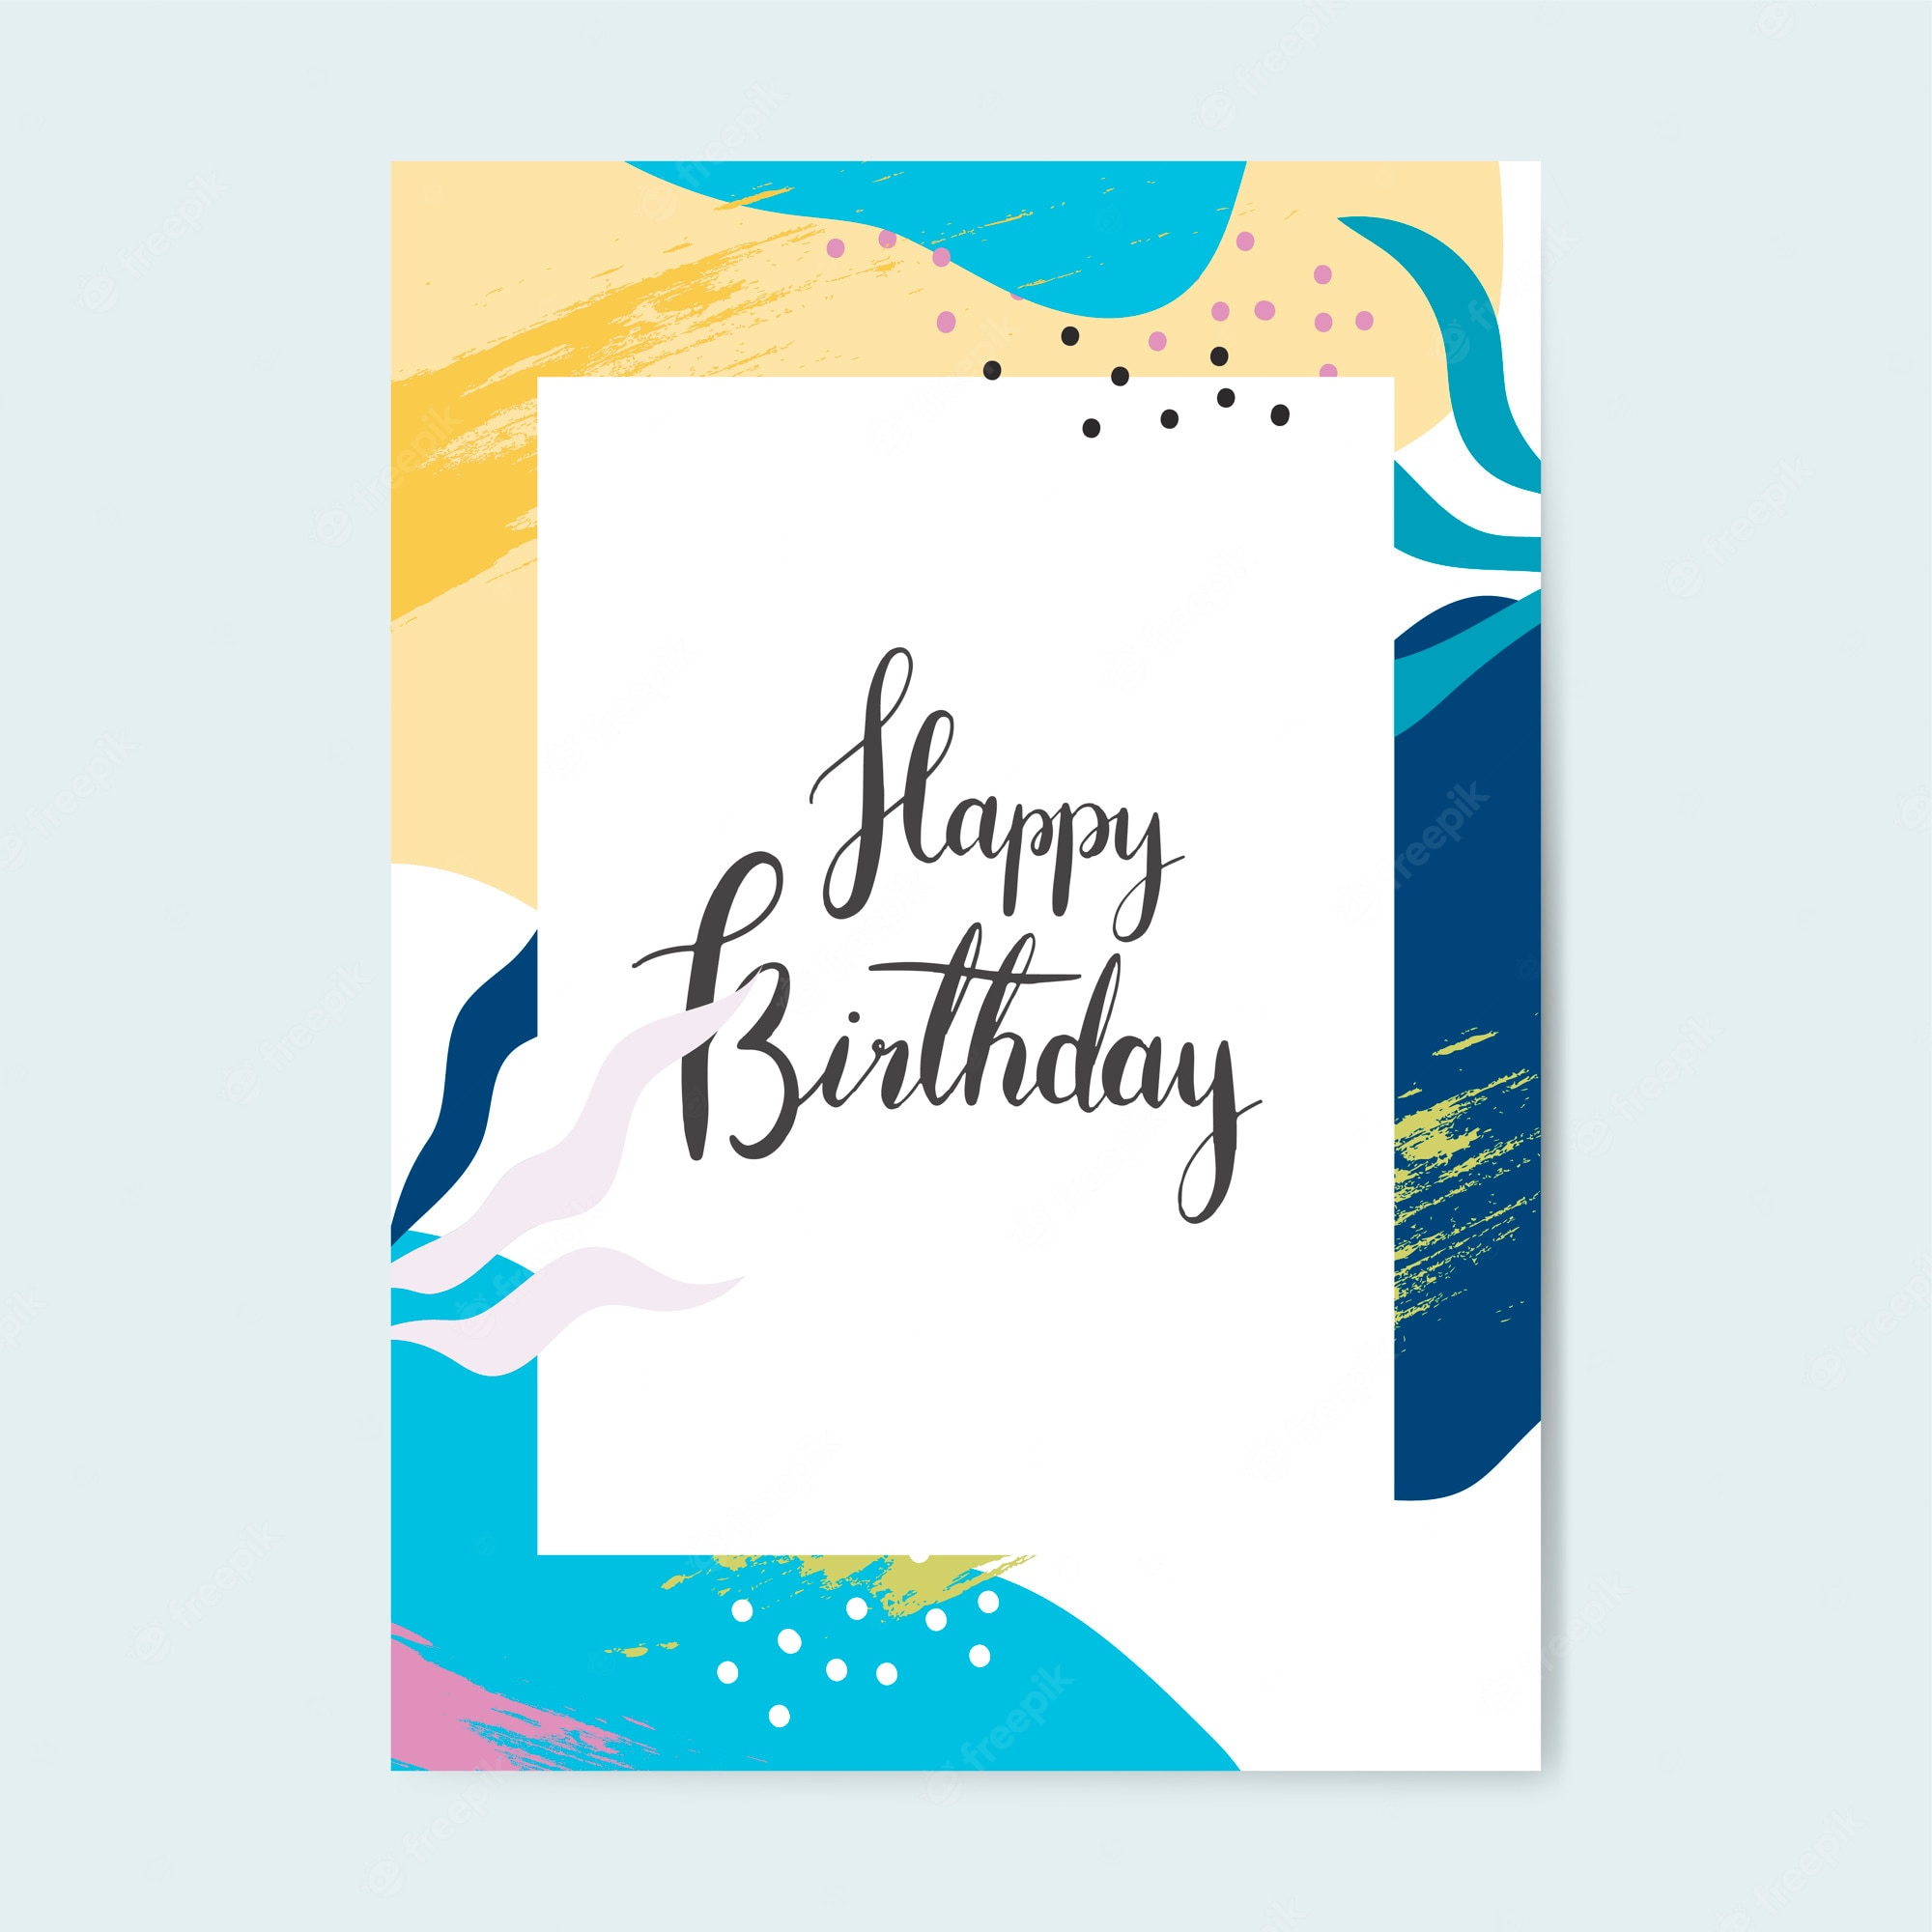 Modern Birthday Cards Image. Free Vectors, & PSD